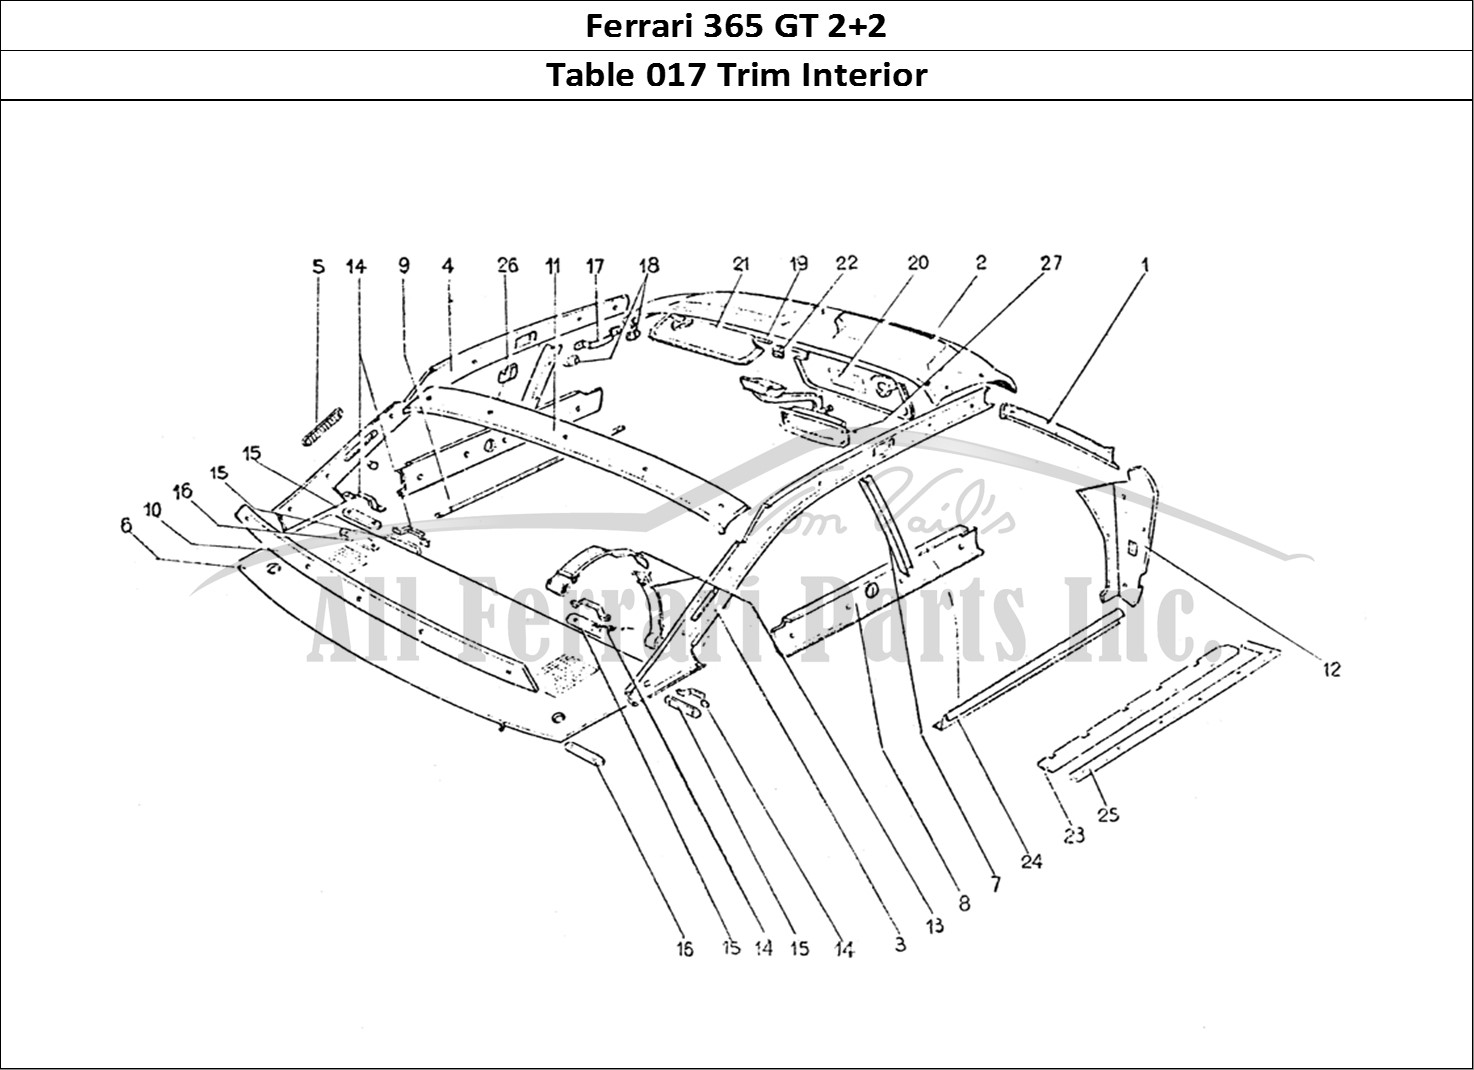 Ferrari Parts Ferrari 365 GT 2+2 (Coachwork) Page 017 Inner trim & Accessories